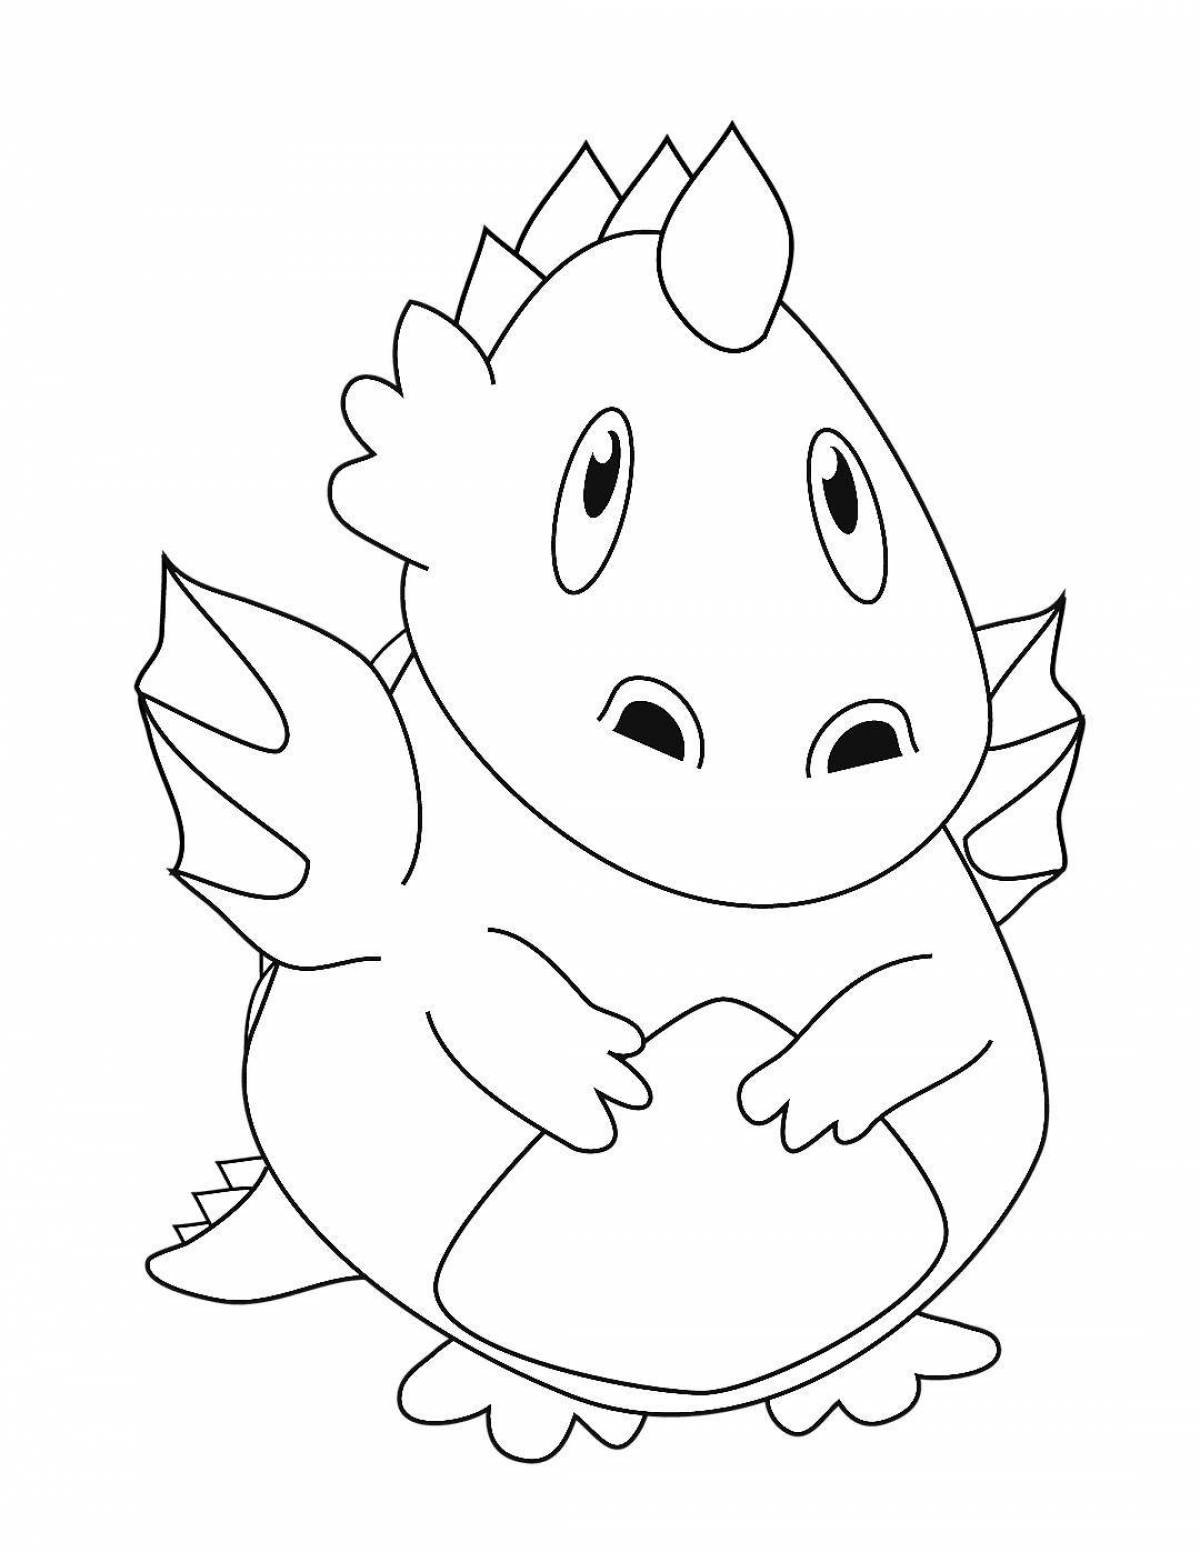 Playful cute dragon coloring book